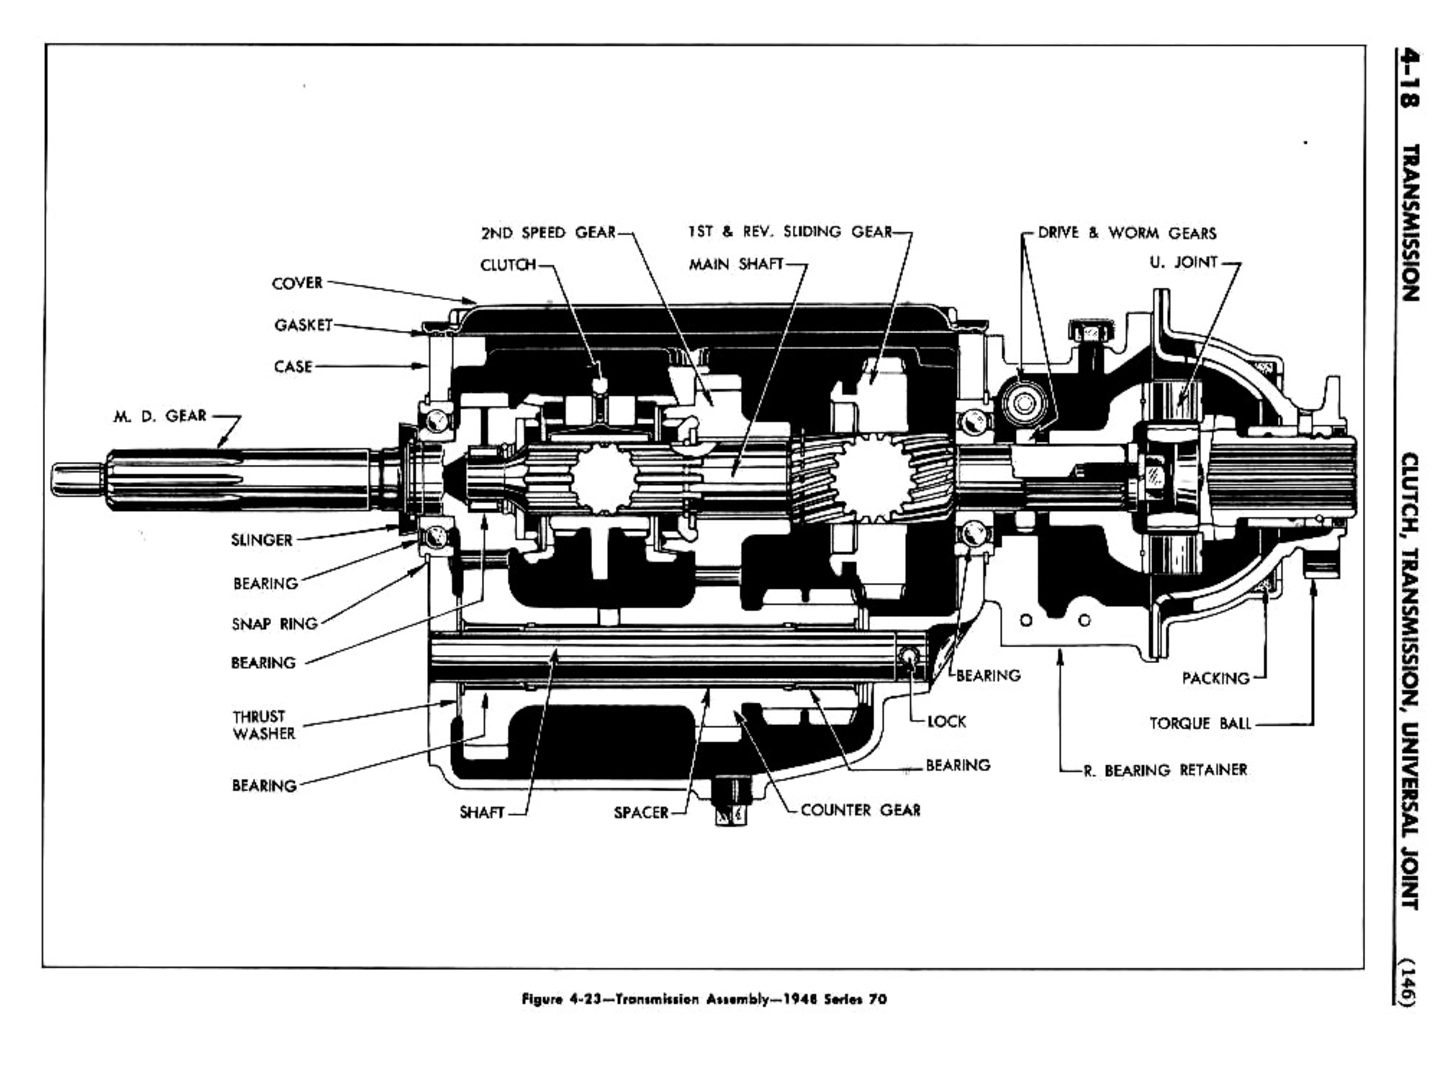 n_05 1948 Buick Shop Manual - Transmission-018-018.jpg